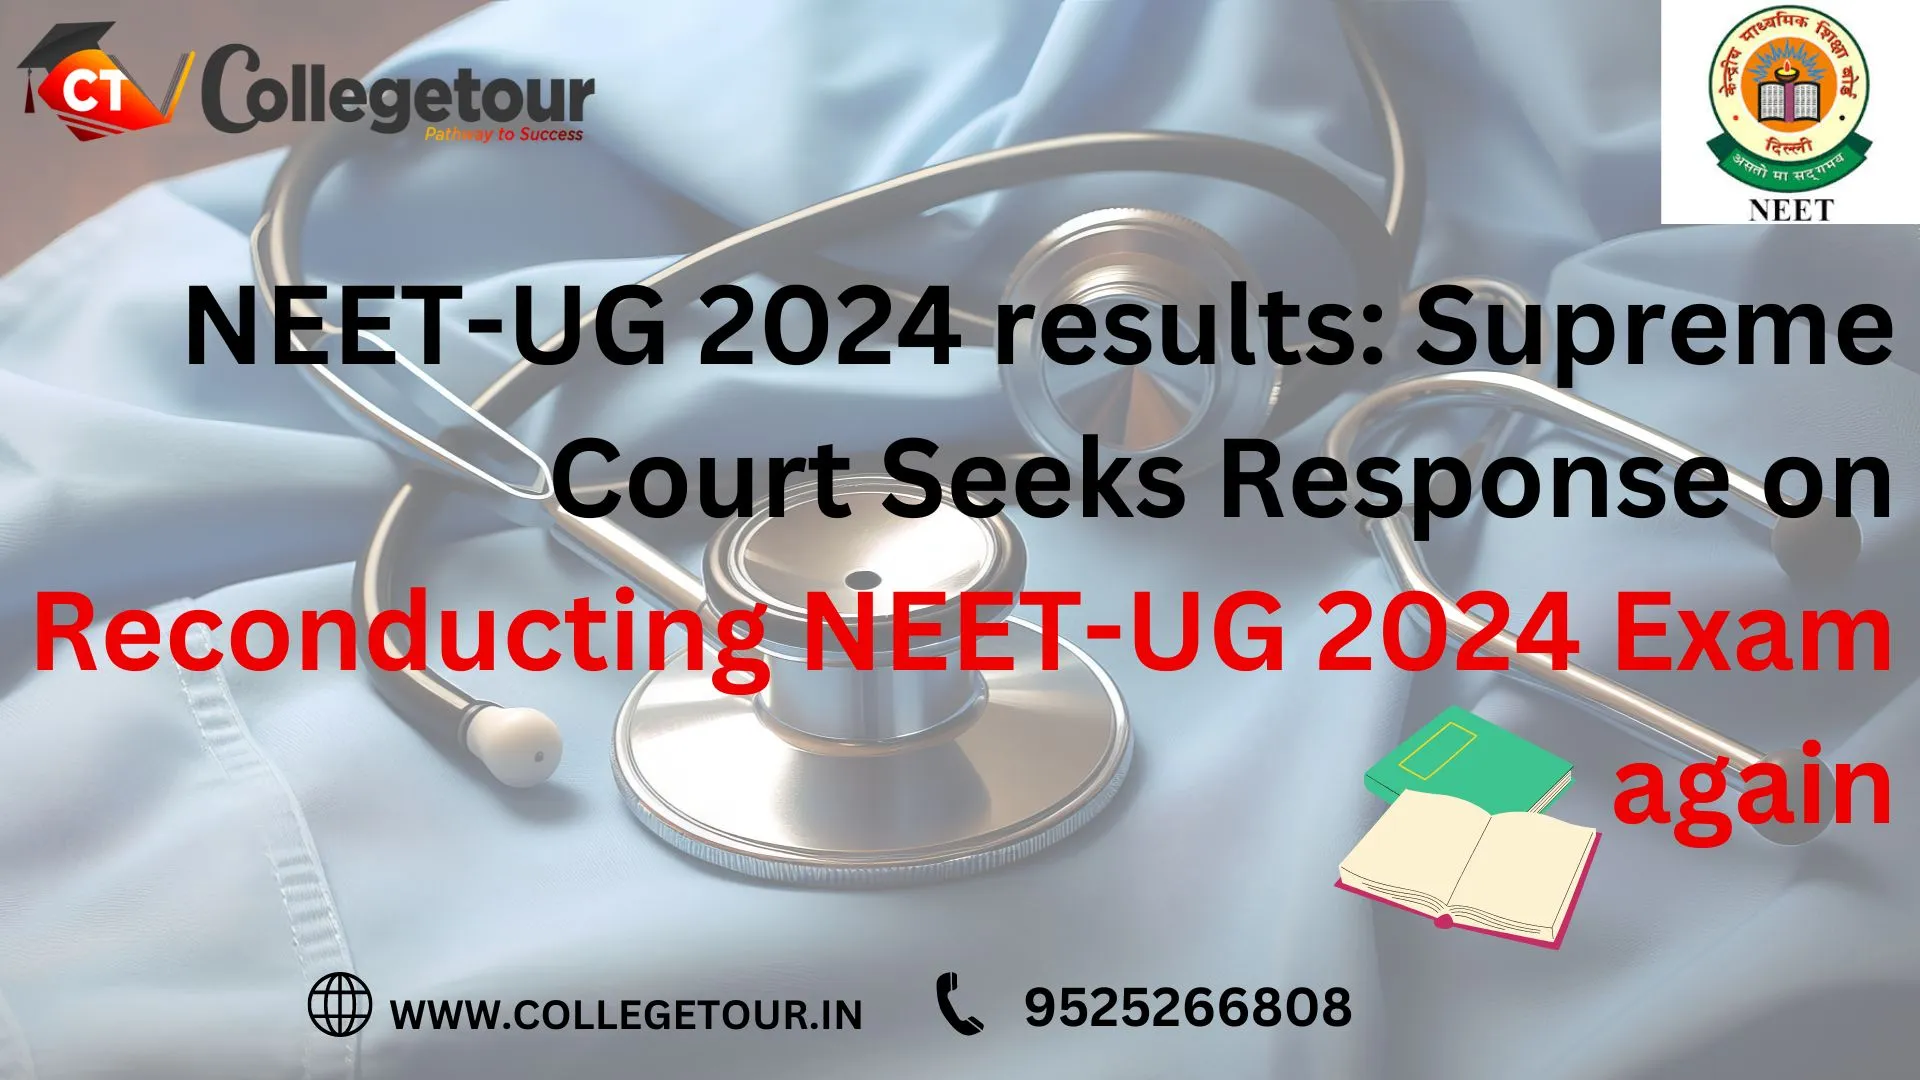 NEET-UG 2024 results: Supreme Court Seeks Response on Reconducting NEET-UG 2024 Exam again